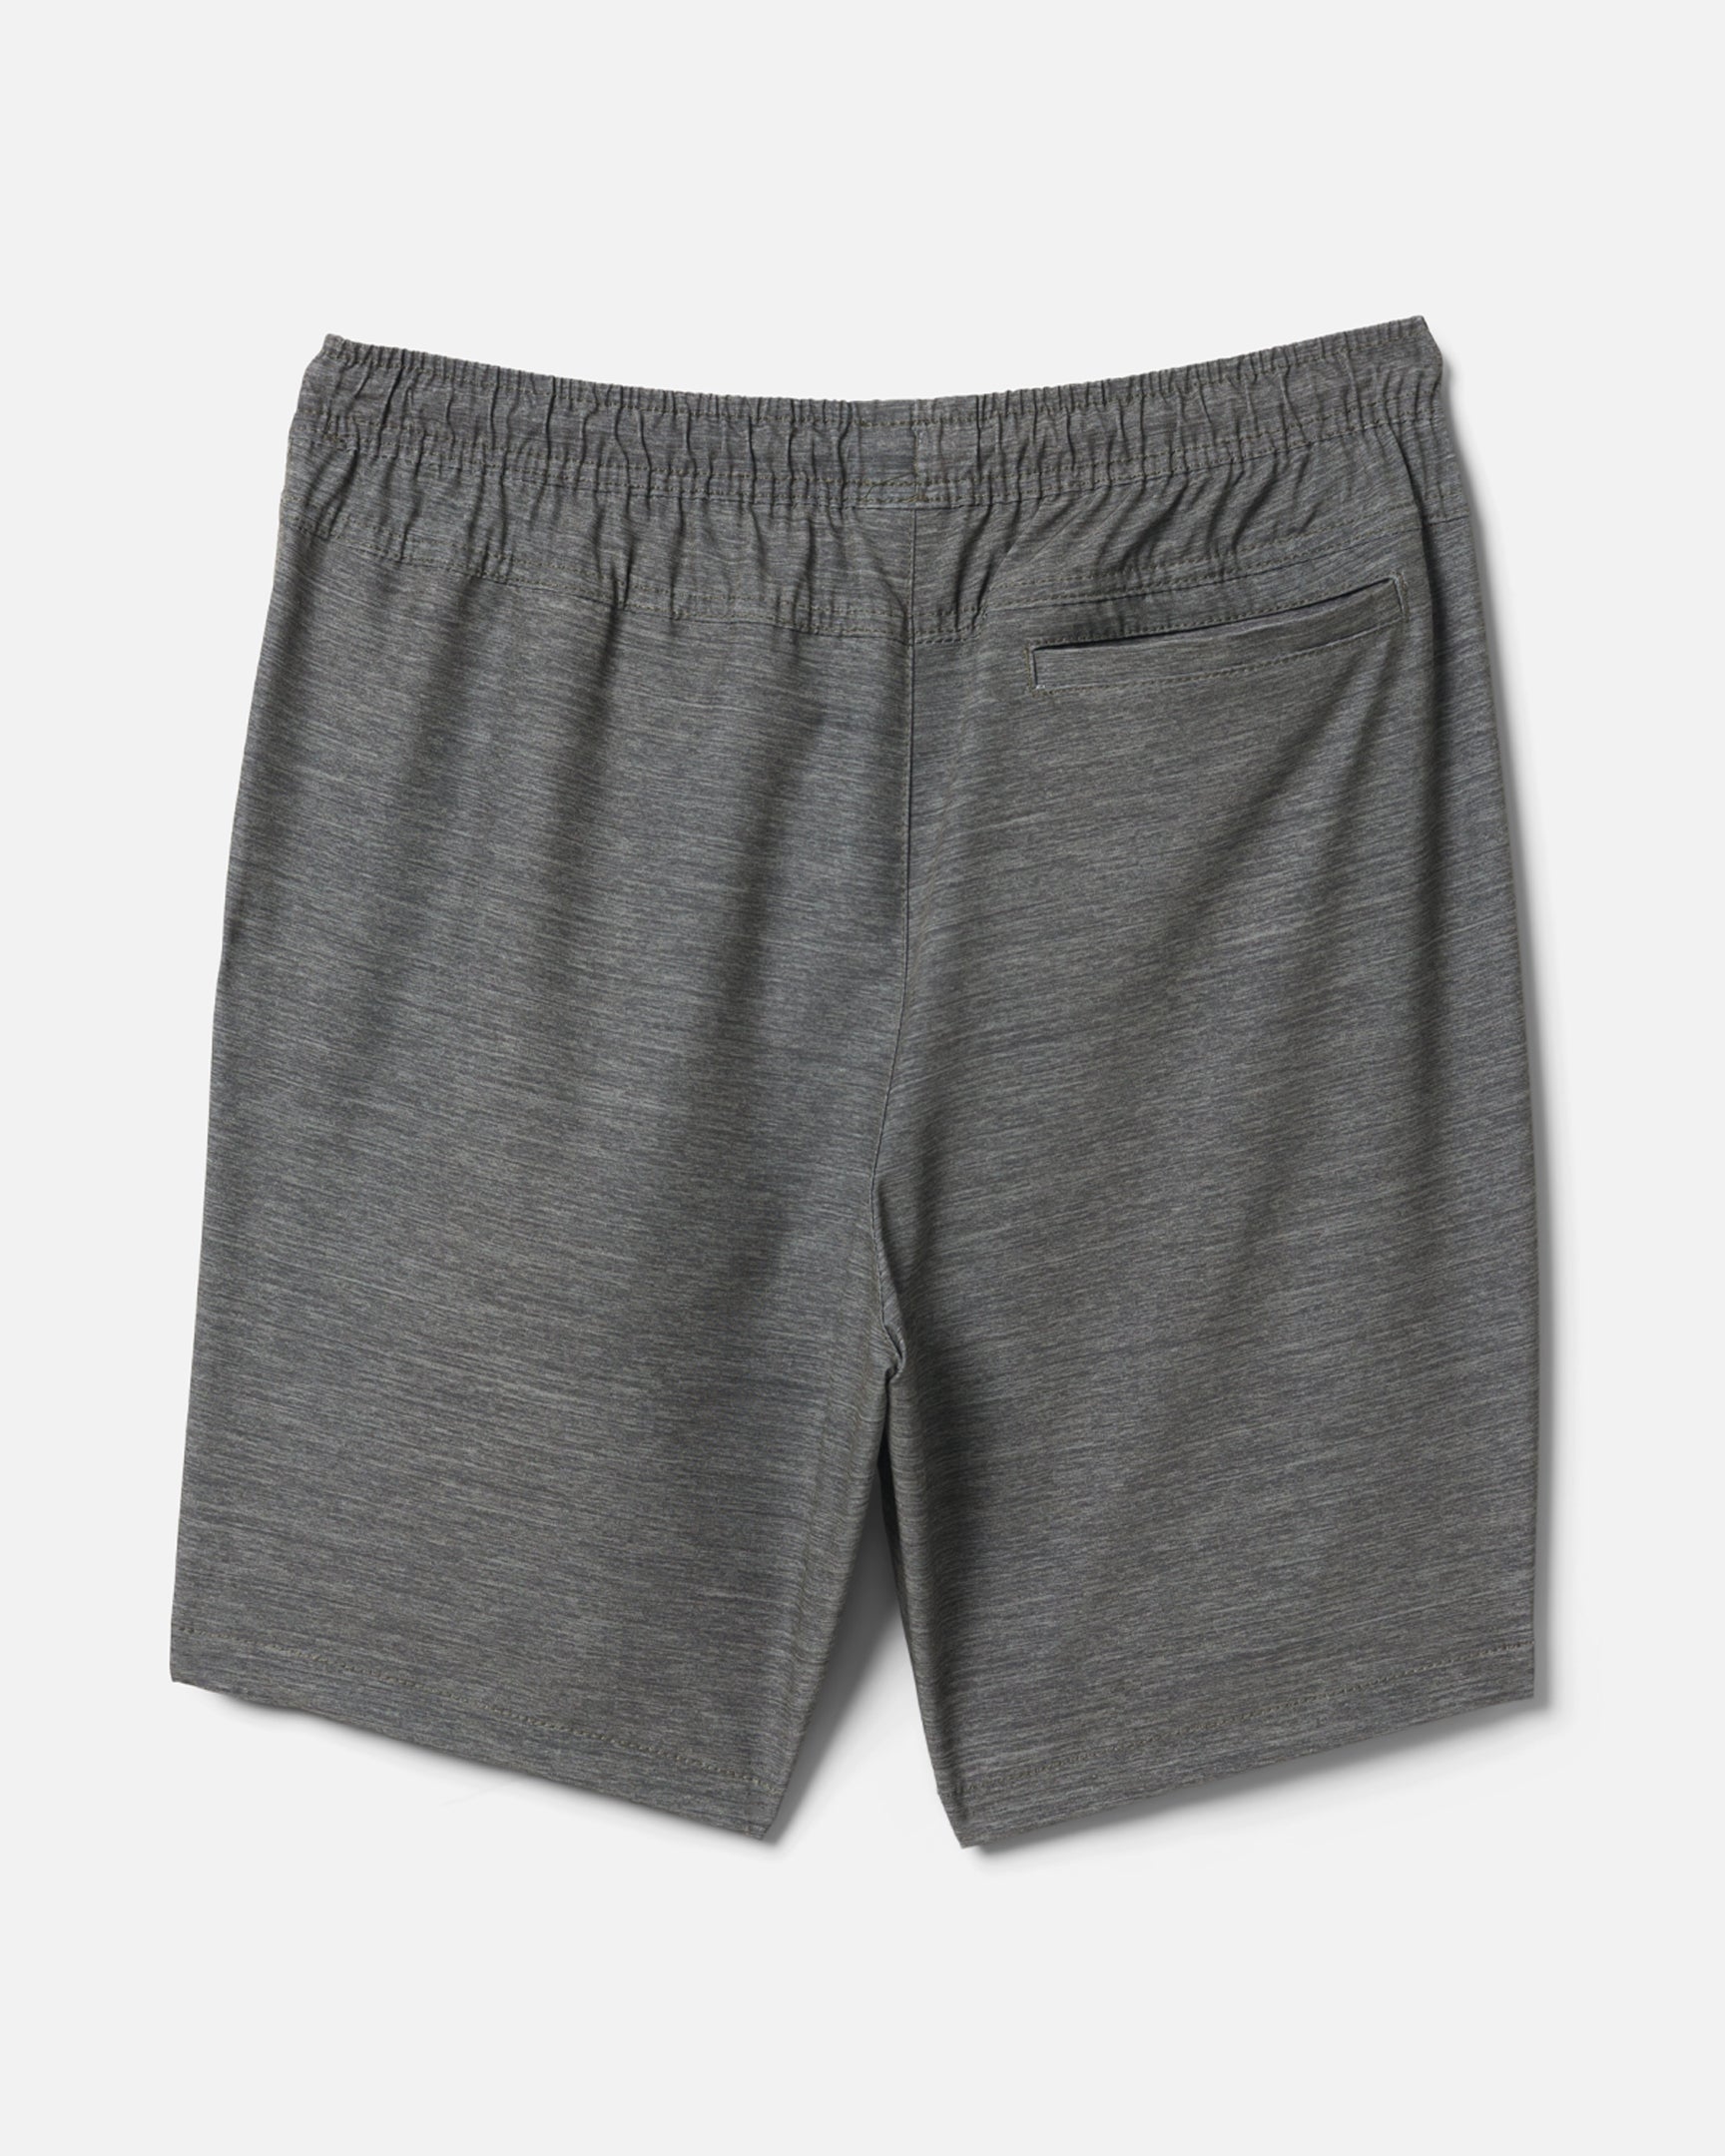 Men's Sweat Shorts, Explore our New Arrivals